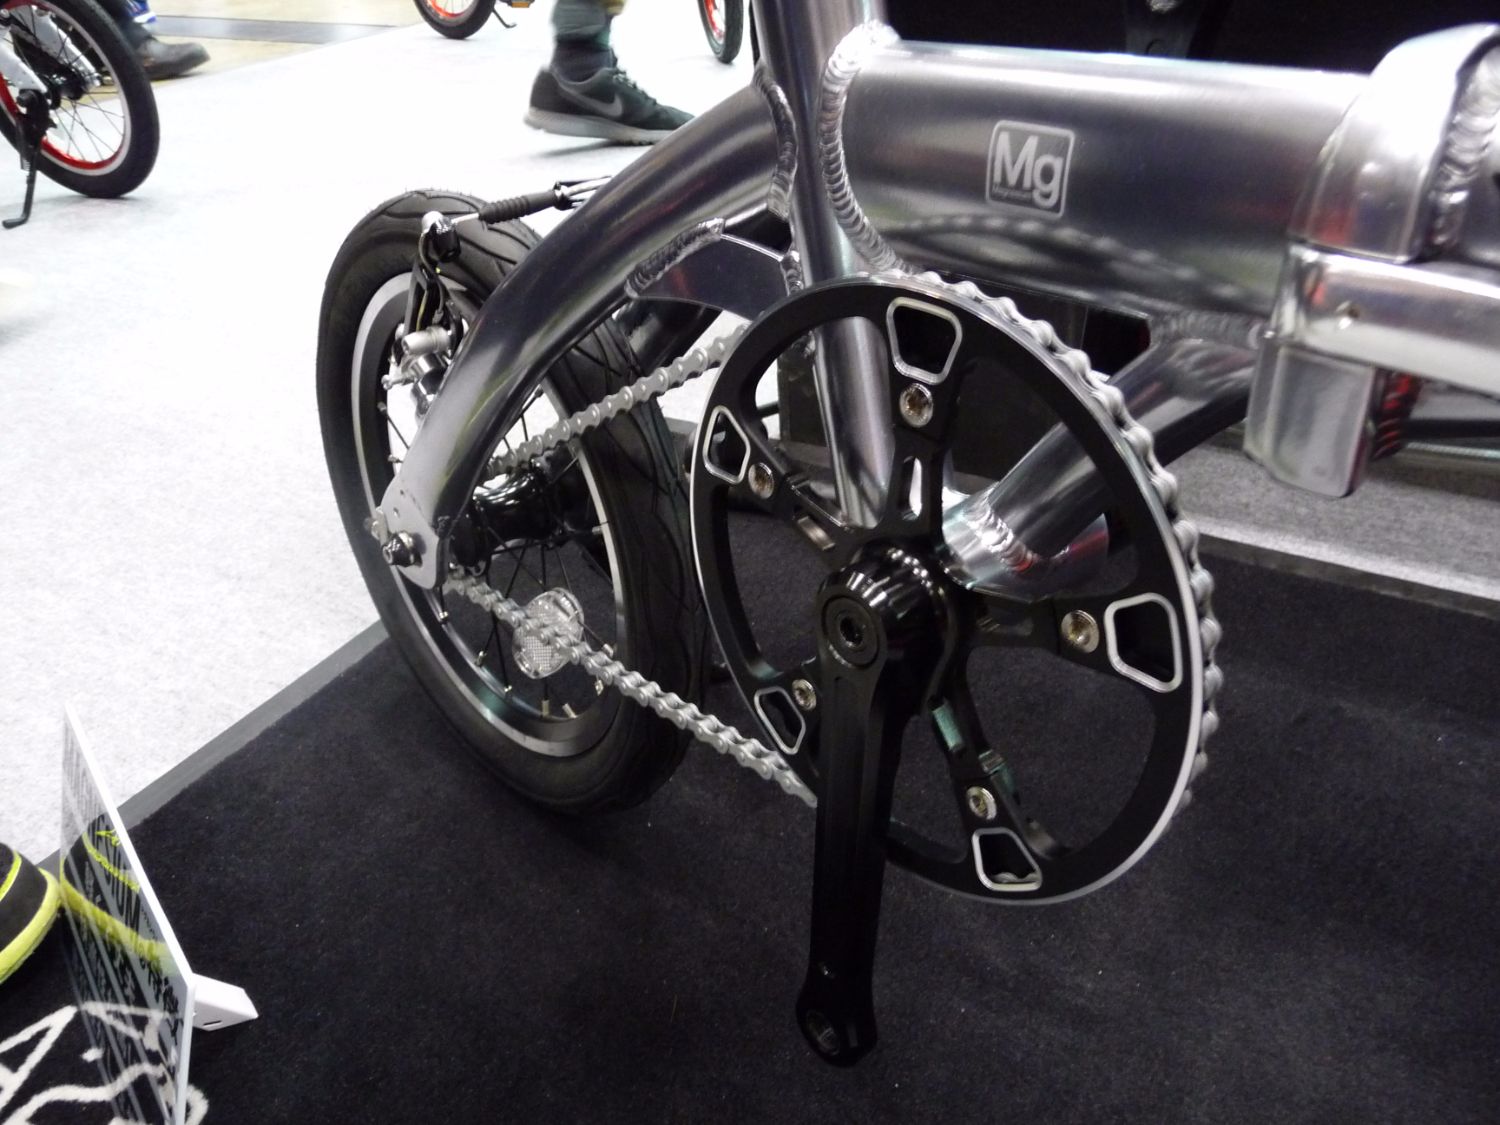 6.7kg！超軽量折りたたみ自転車ルノーマグネシウム6が新登場